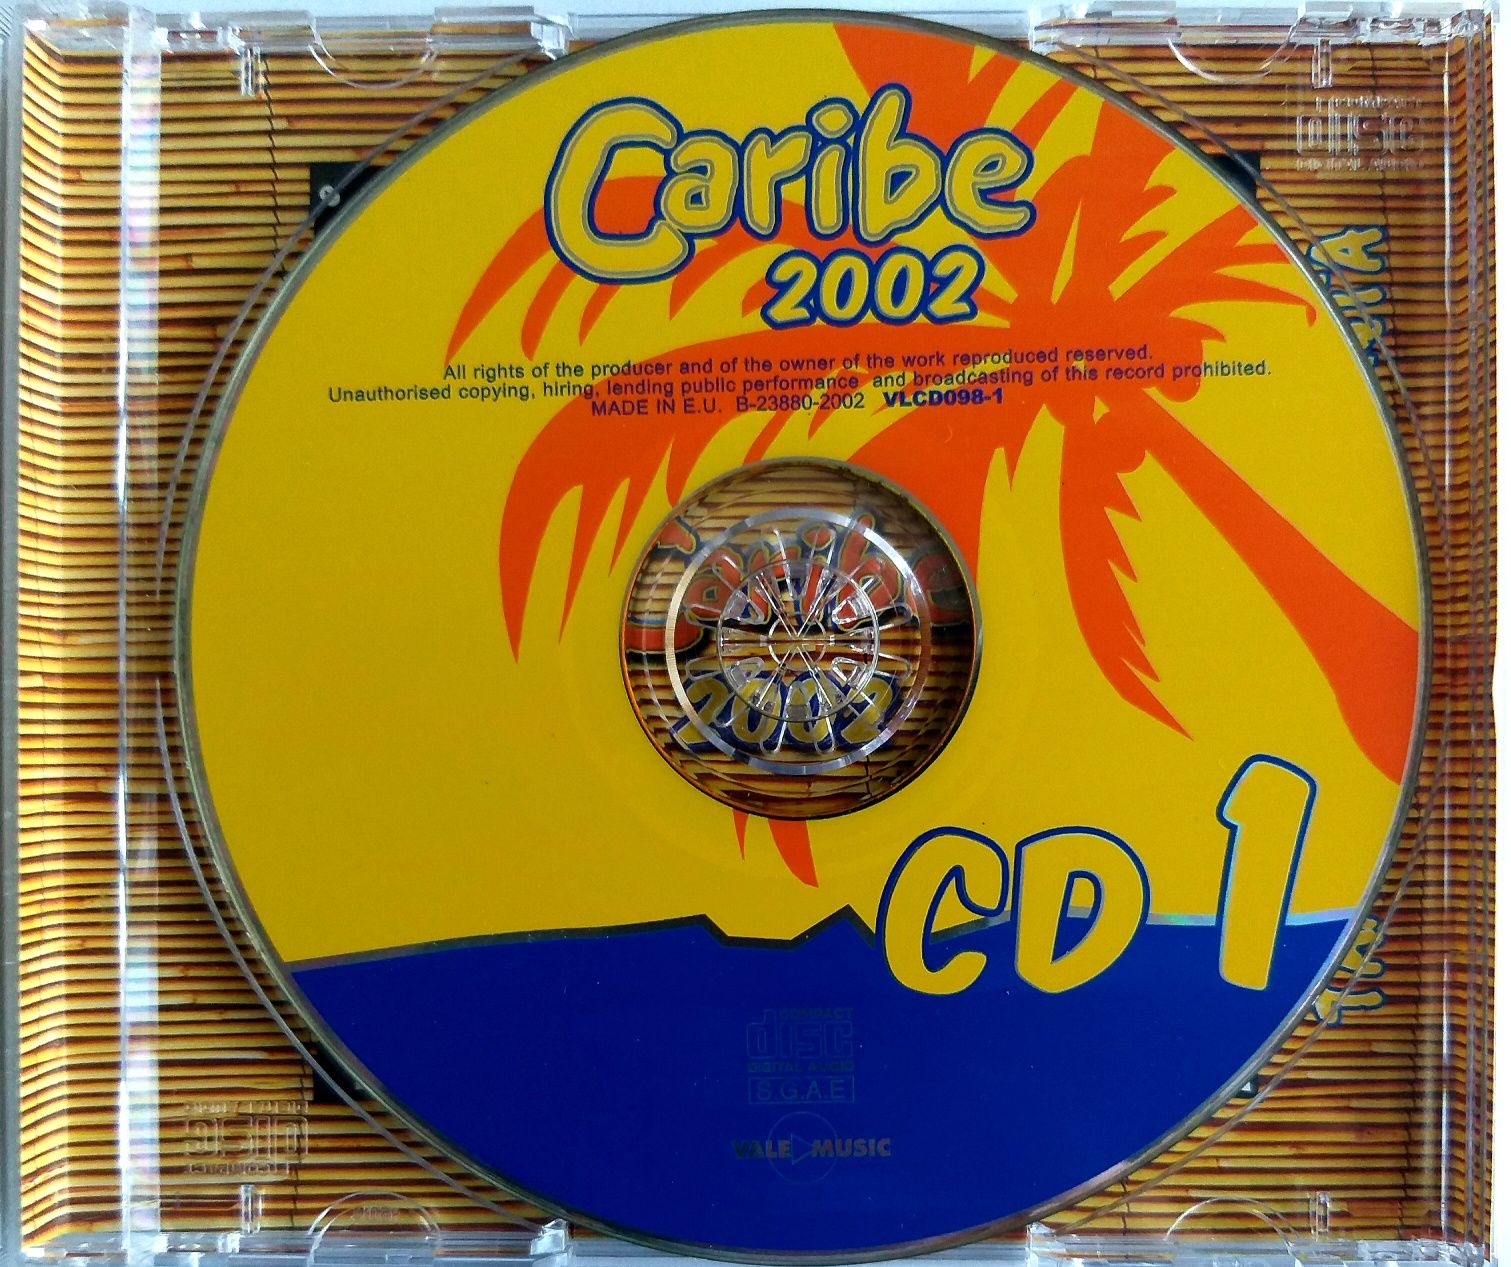 Caribe 2002 Corazone Latino 2CD 2002r